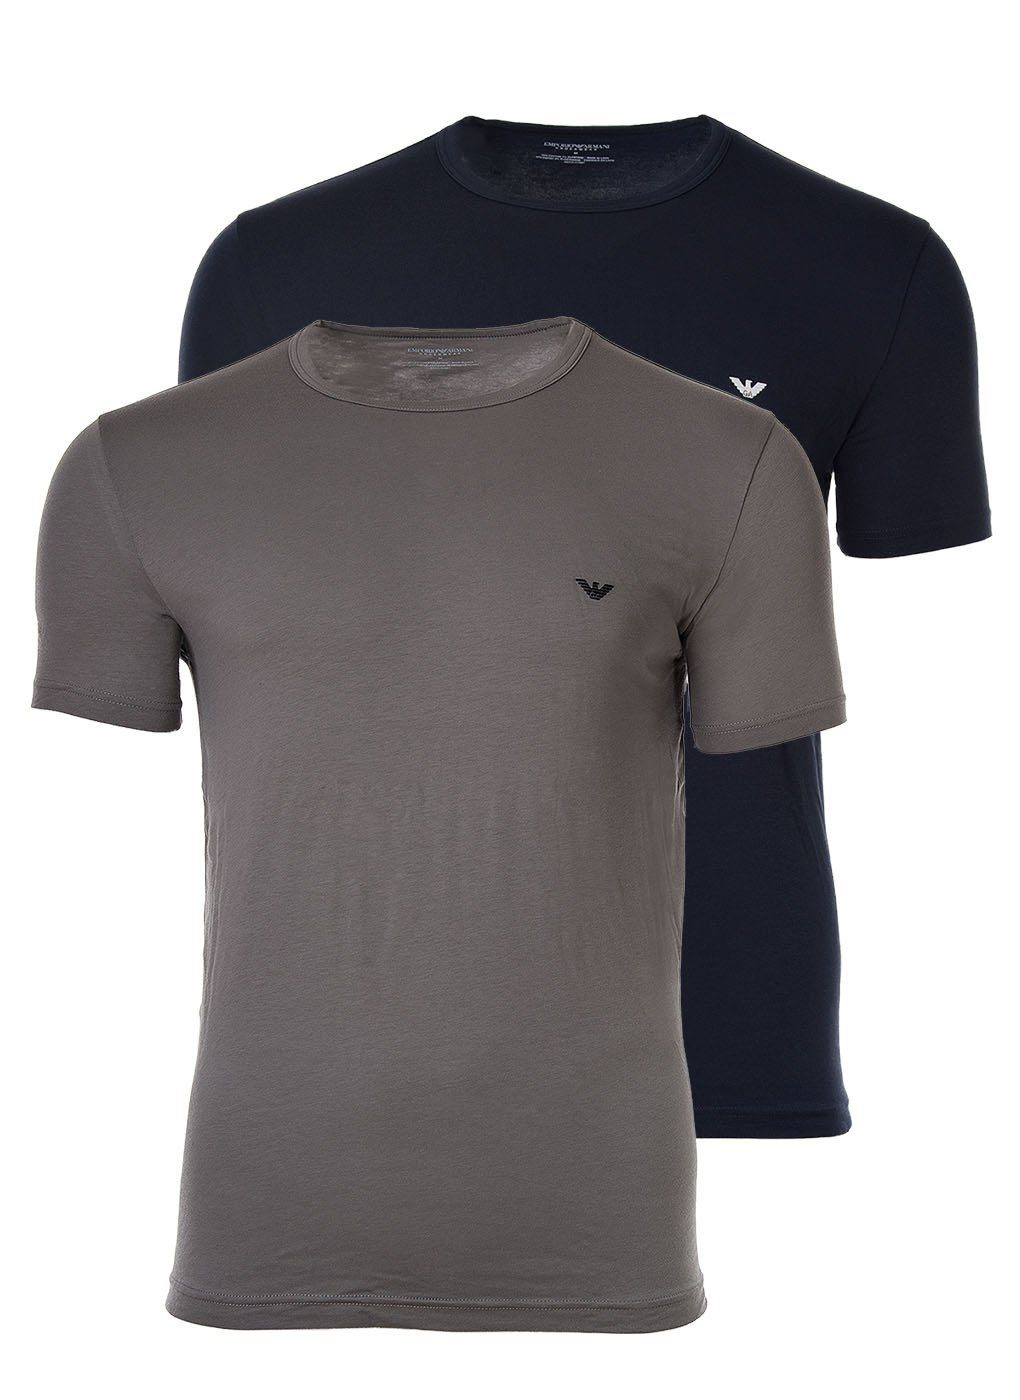 Emporio Armani T-Shirt Herren T-Shirt 2er Pack - Crew Neck, Rundhals grau/marine